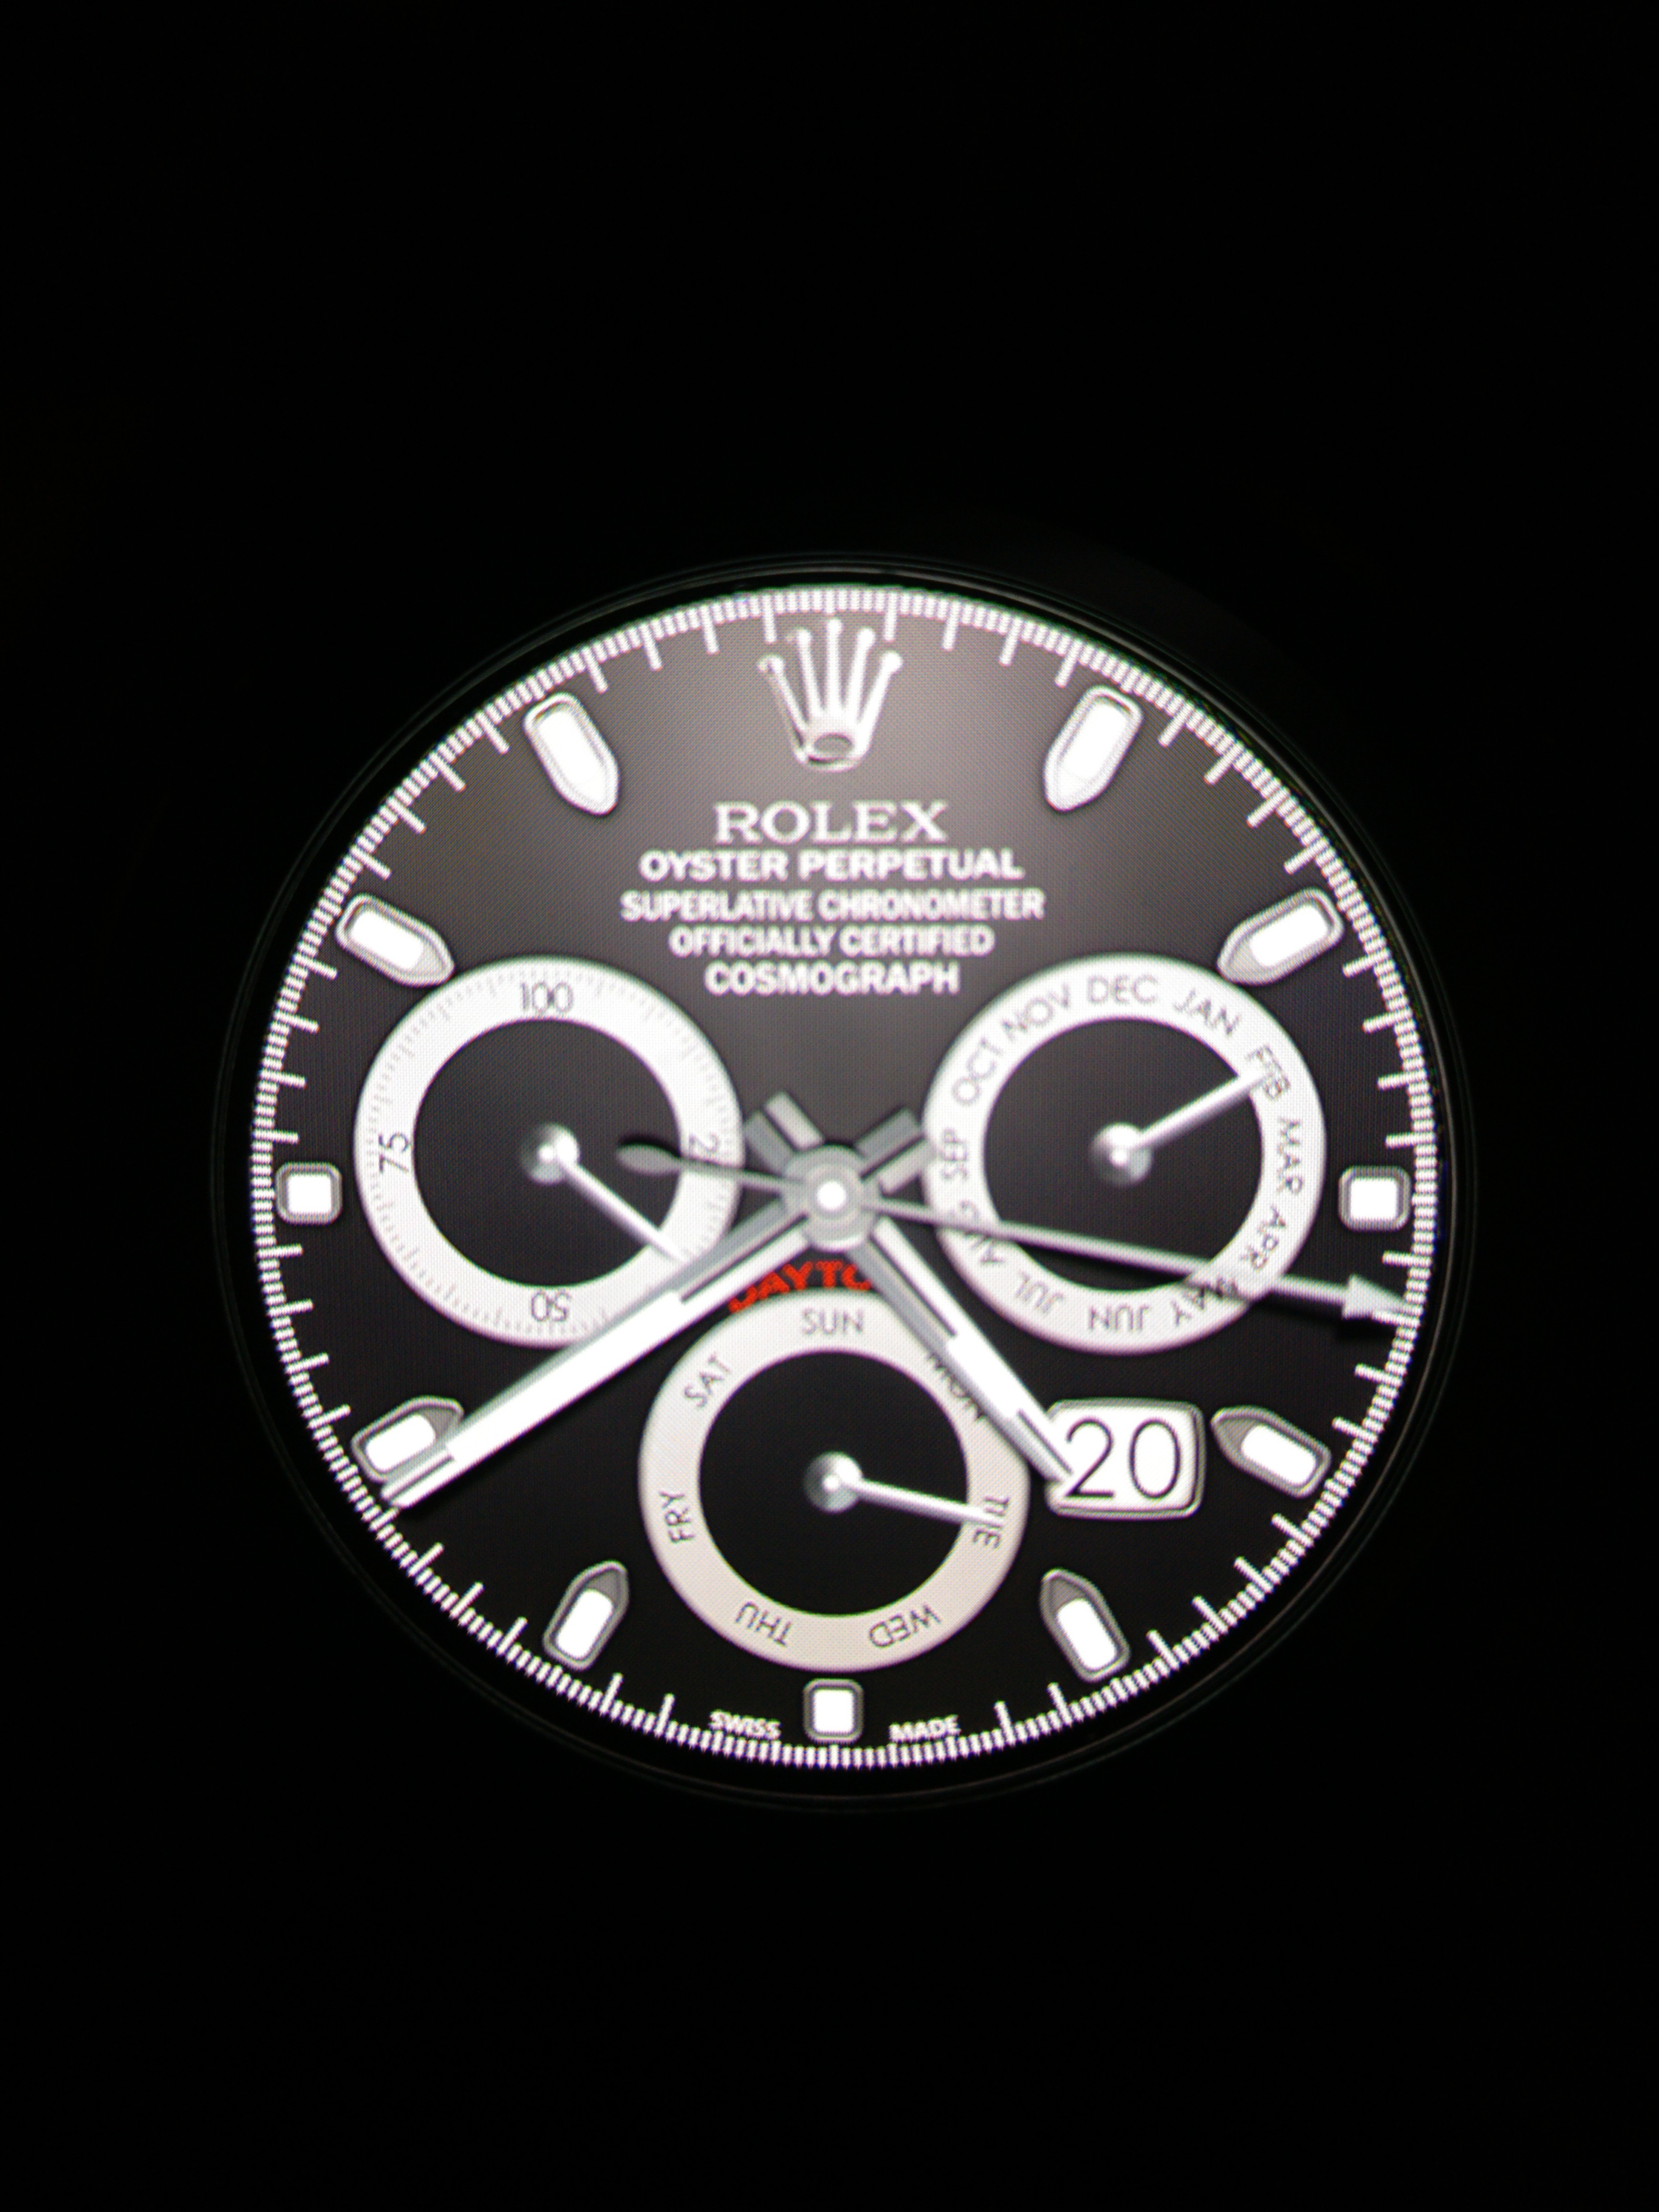 Циферблаты watch 3 pro. Циферблат Rolex для Gear s2. Rolex watchface. Циферблат Rolex для часов Gear s3. Rolex Gear s3.